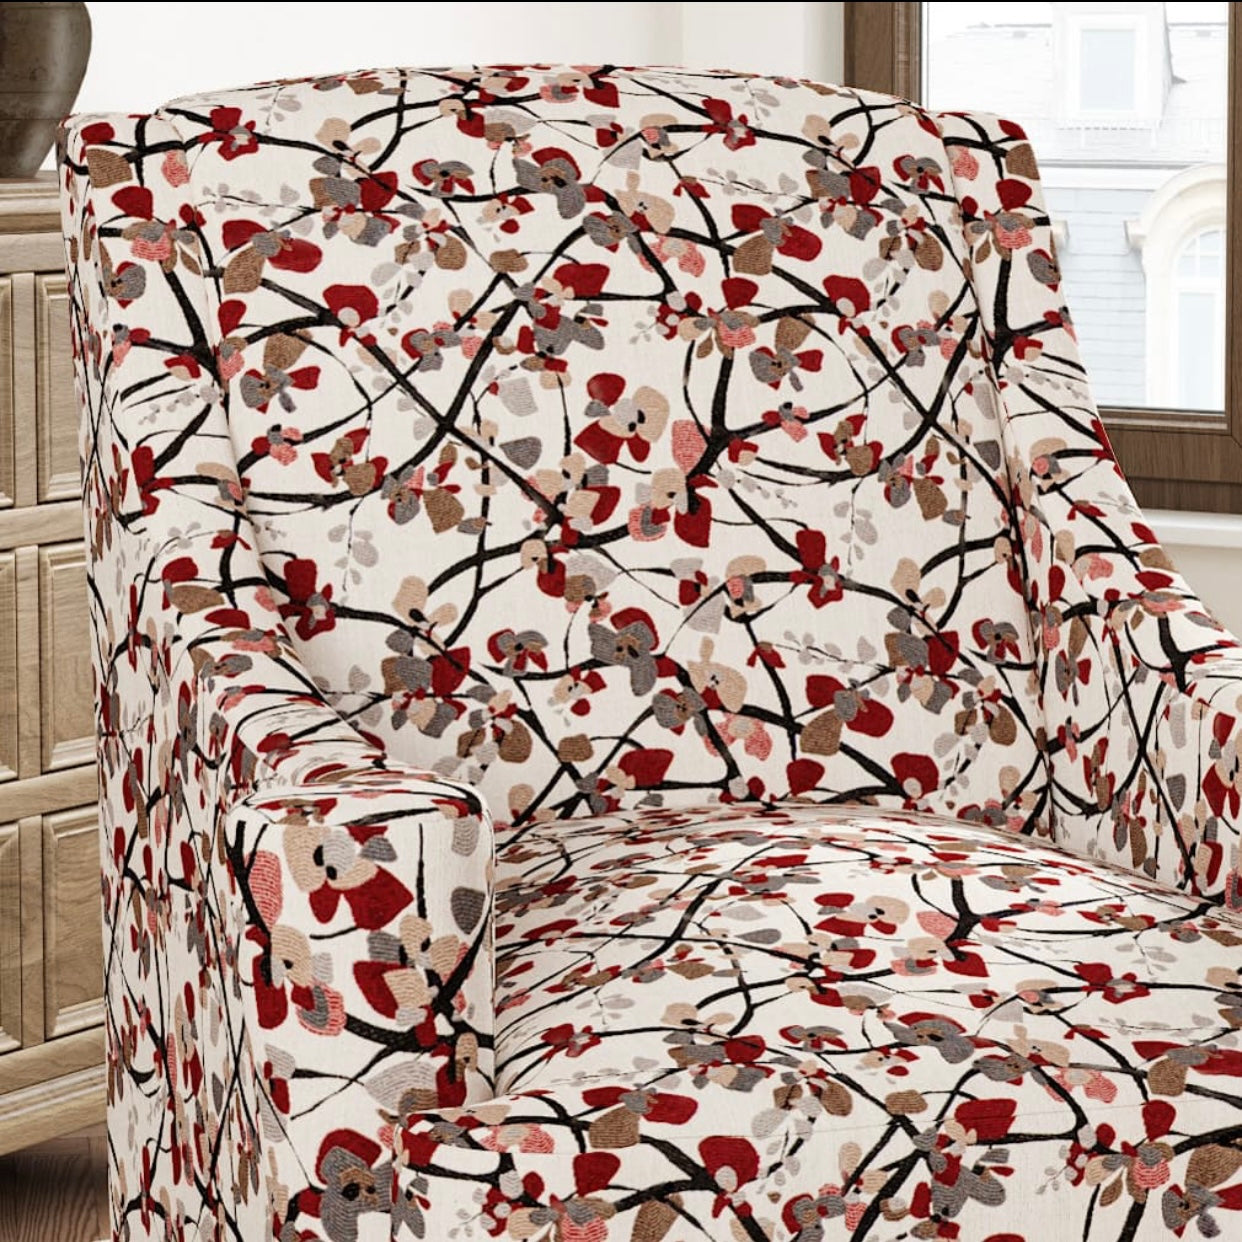 Plum Red Burgundy Maroon Velvet Upholstery Drapery Fabric / RM Villa –  Fabric Bistro